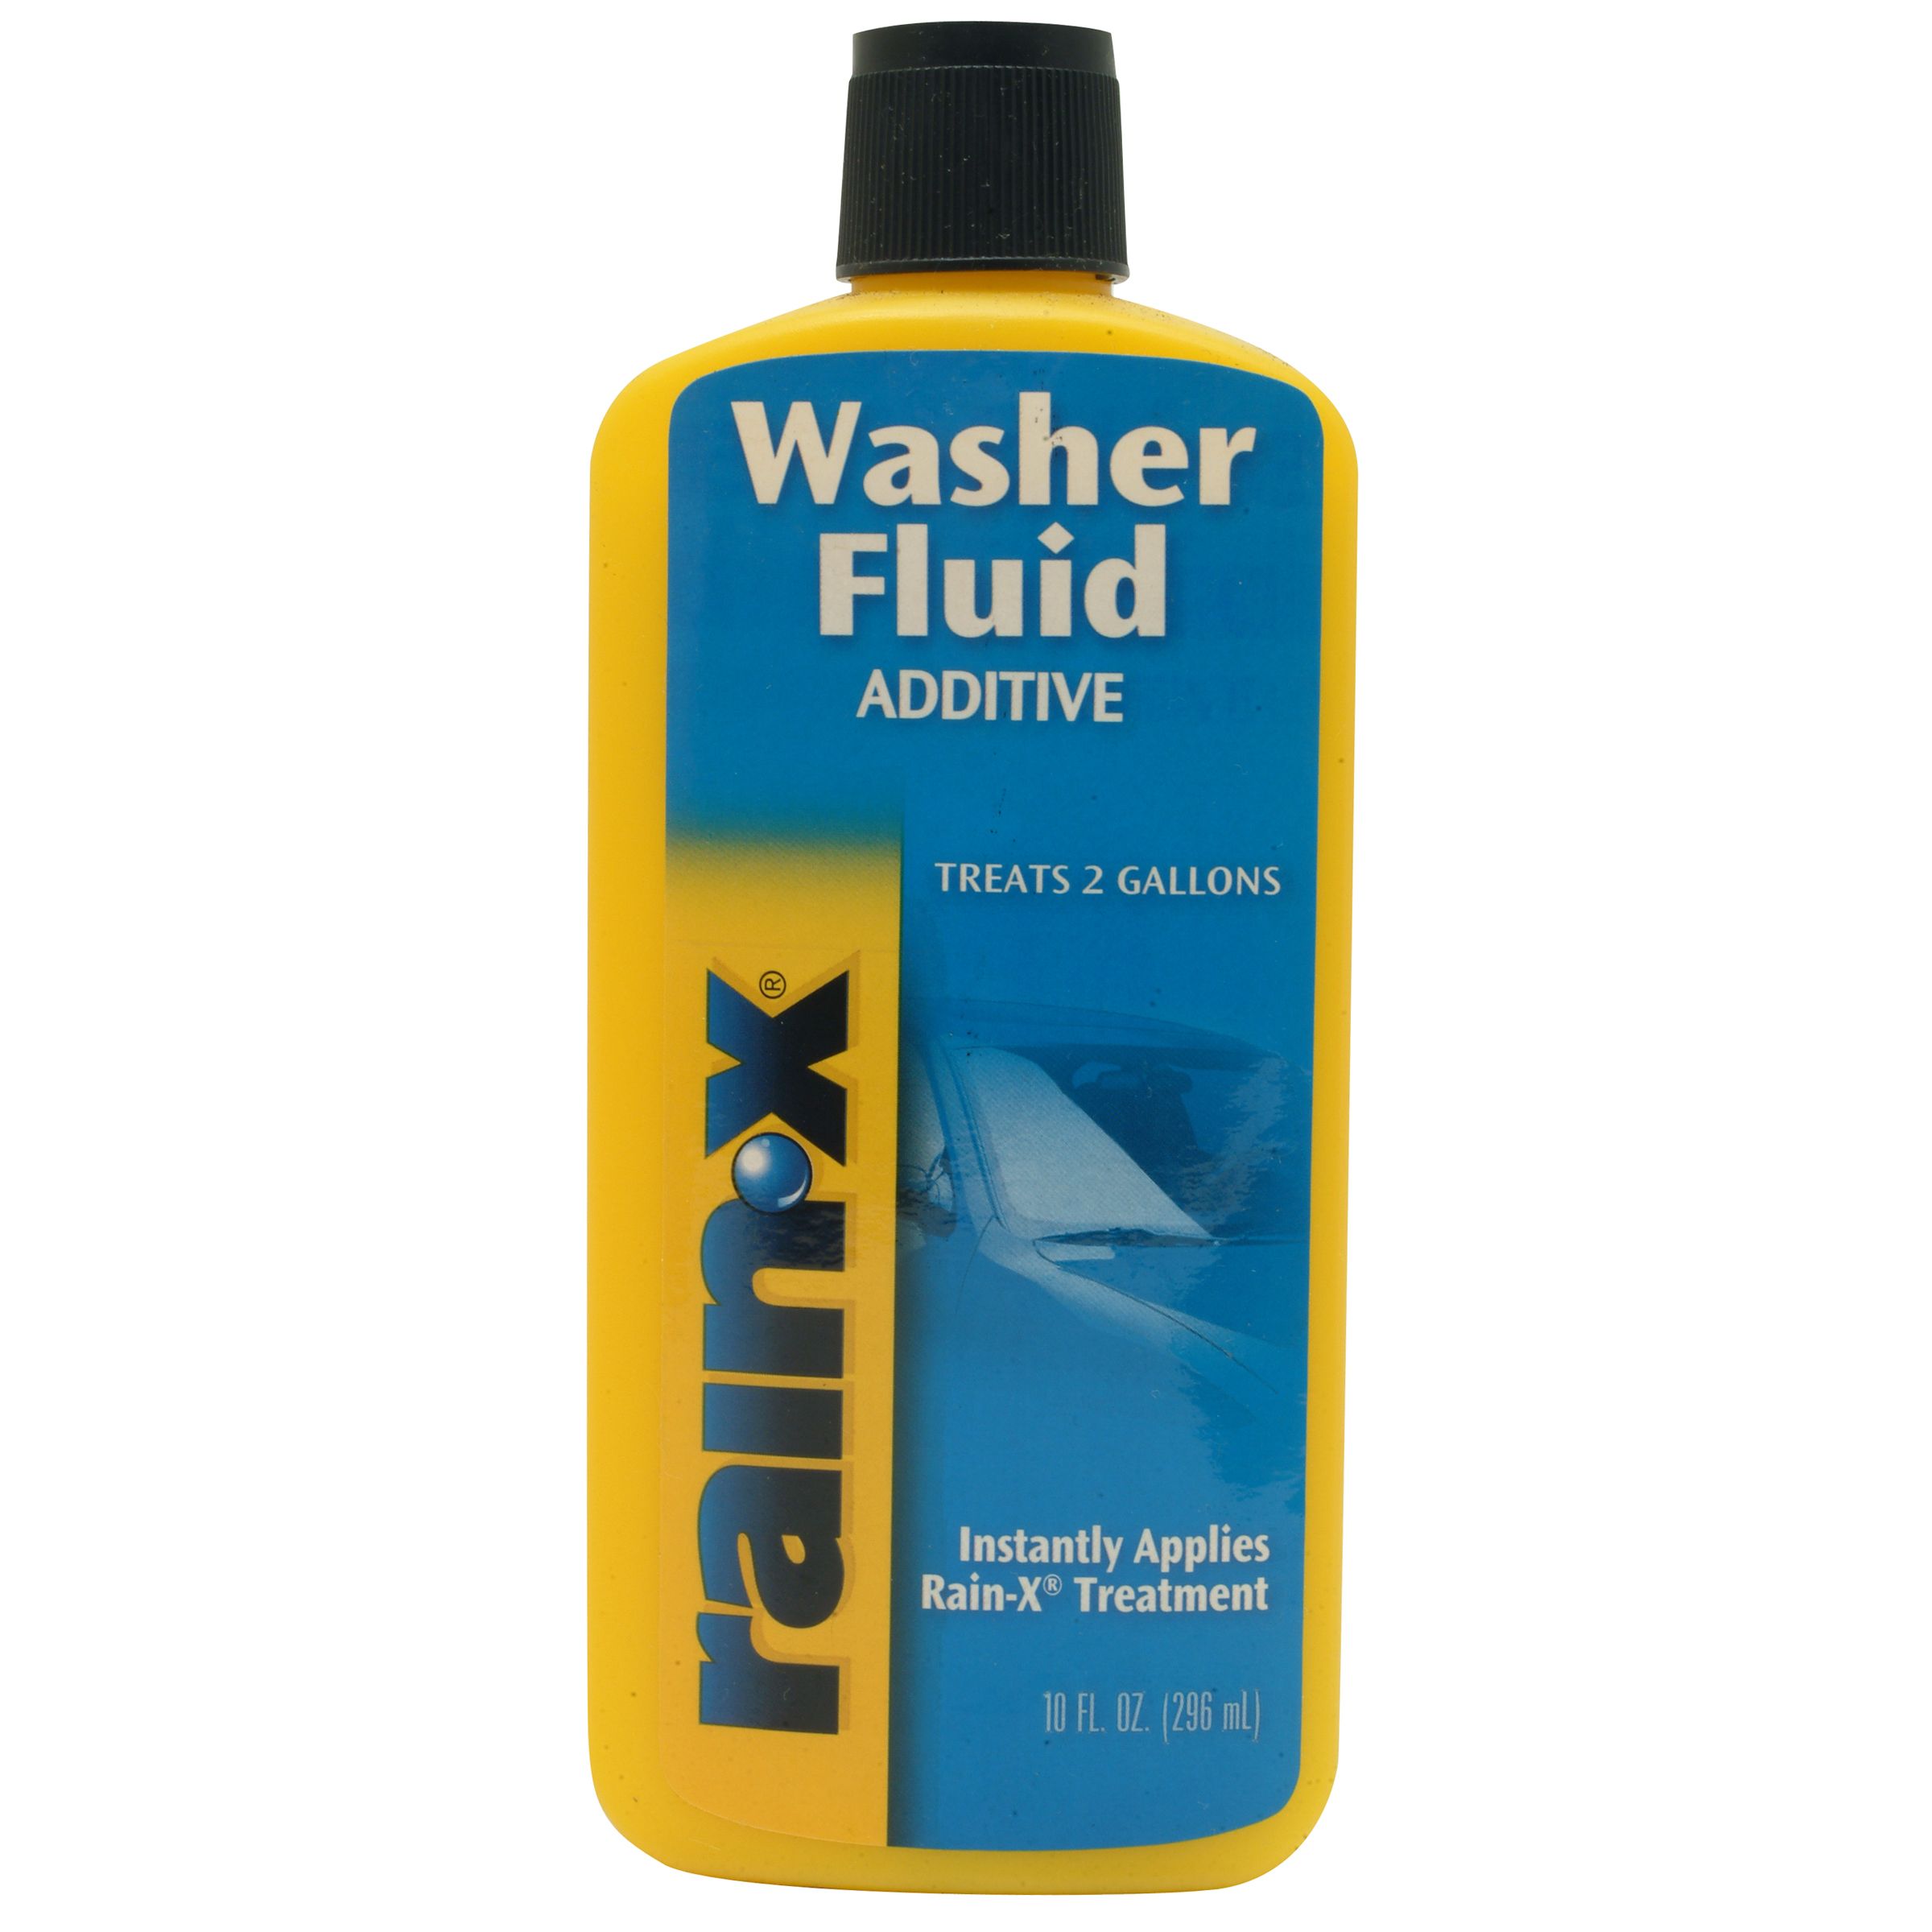 Rain-X Windshield Washer Additive—$2.39 + Free Pickup